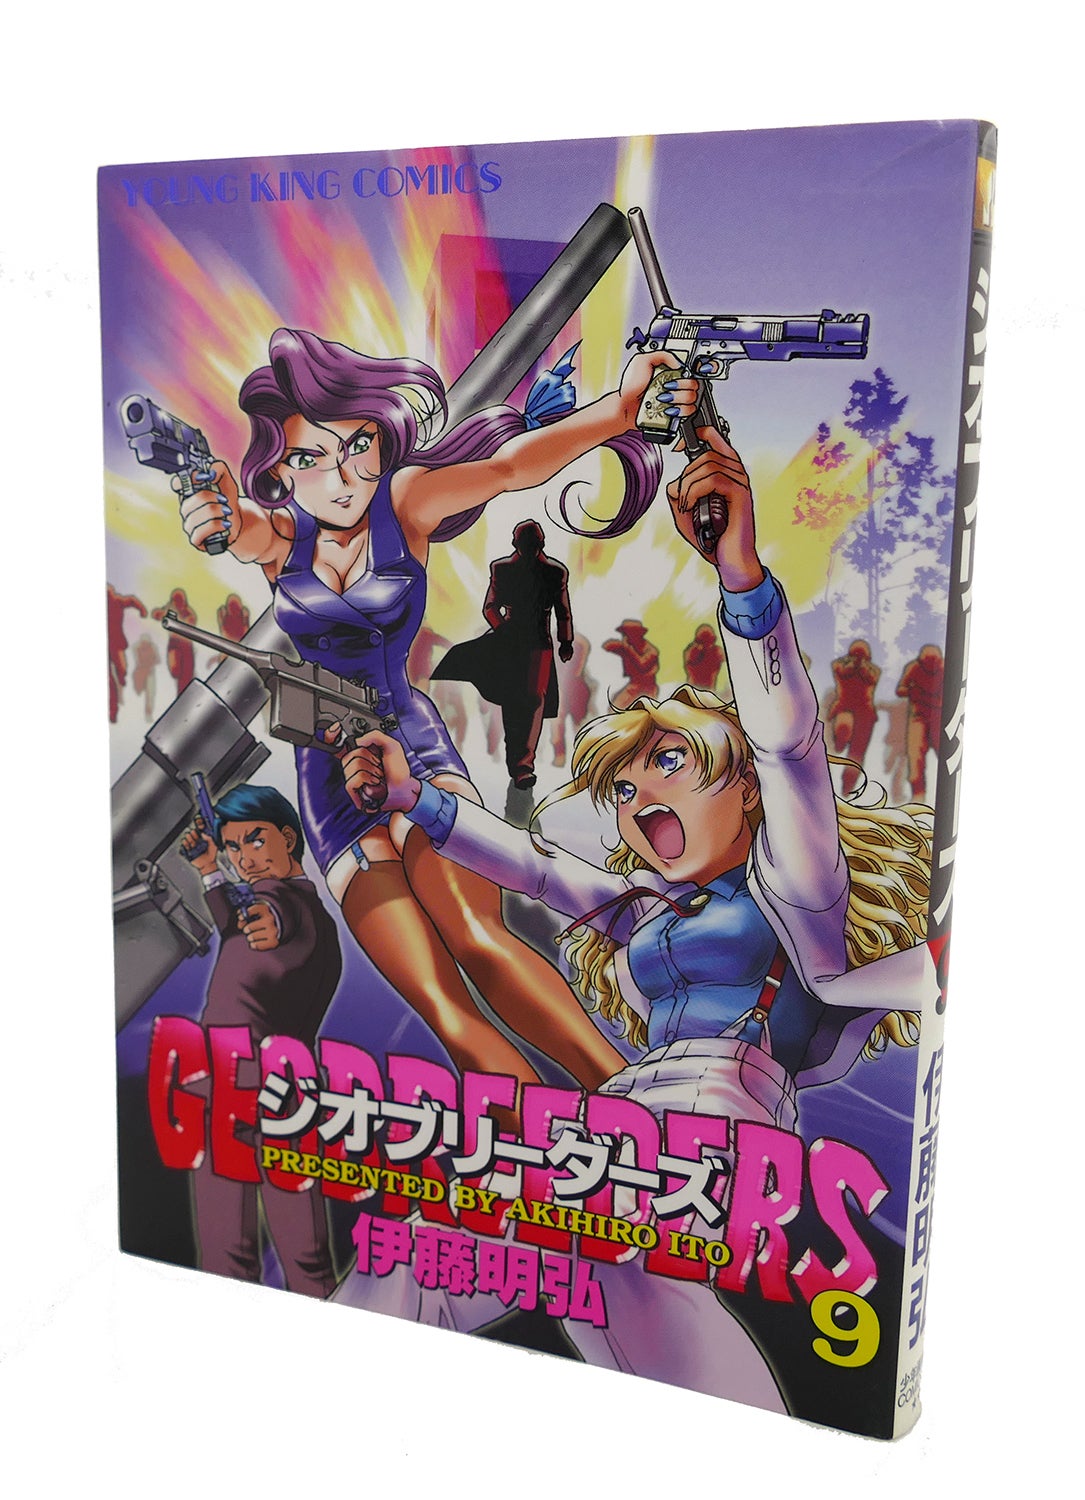 GEOBREEDERS VHS 2000 US Manga Japanese Anime Comic Akihiro Ito $7.99 -  PicClick